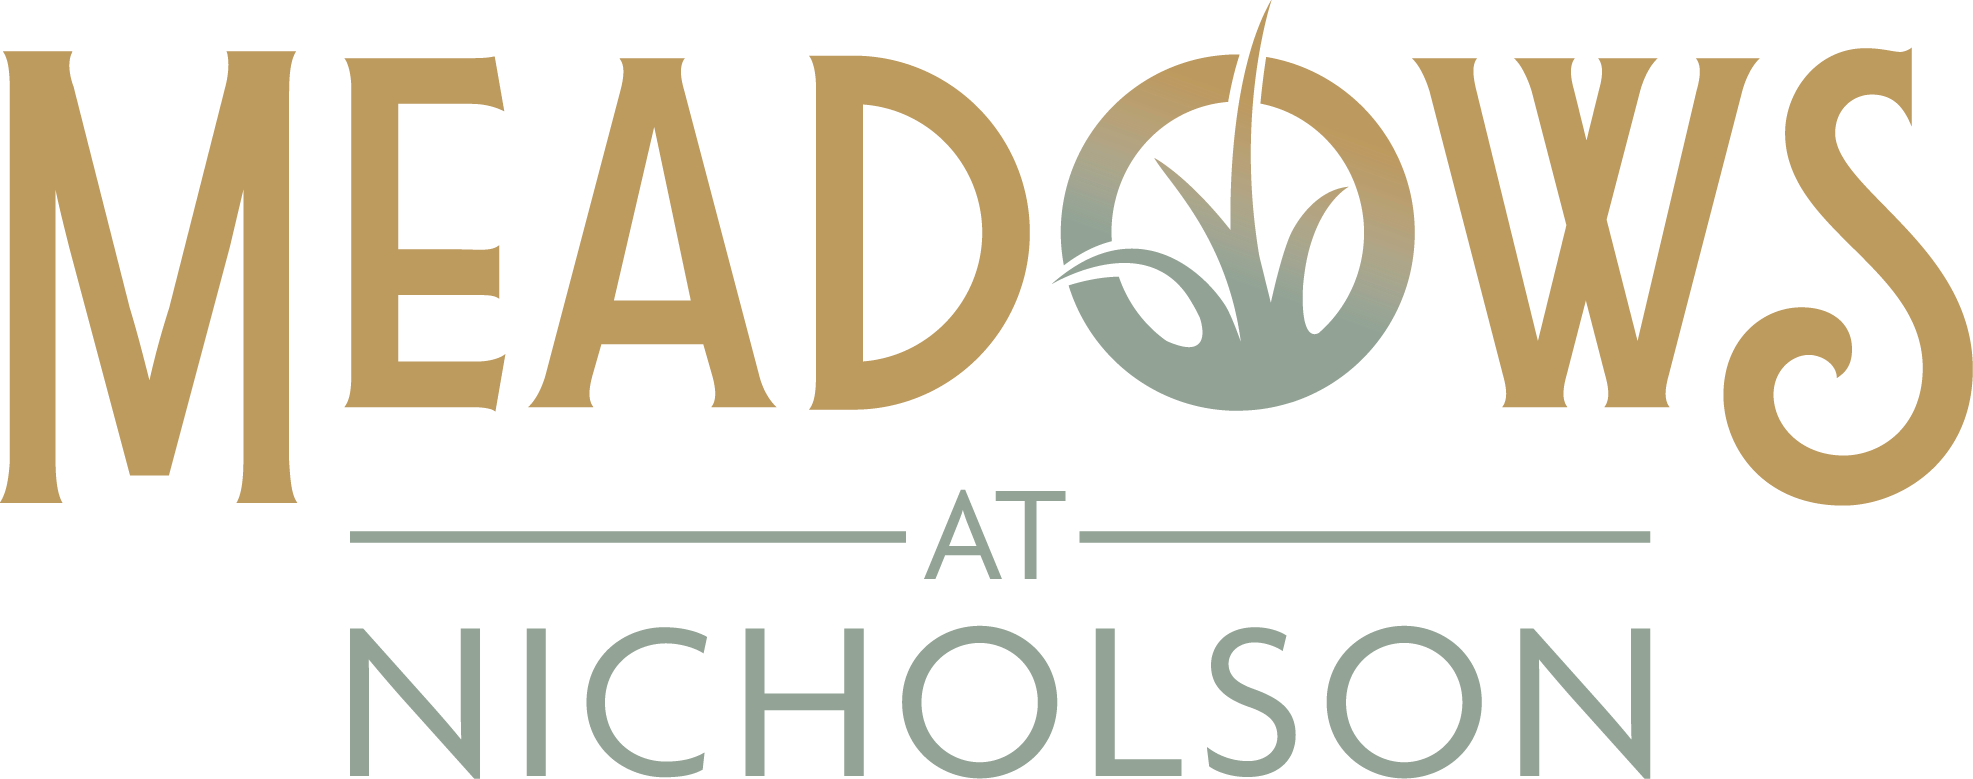 Meadows at Nicholson Promotional Logo